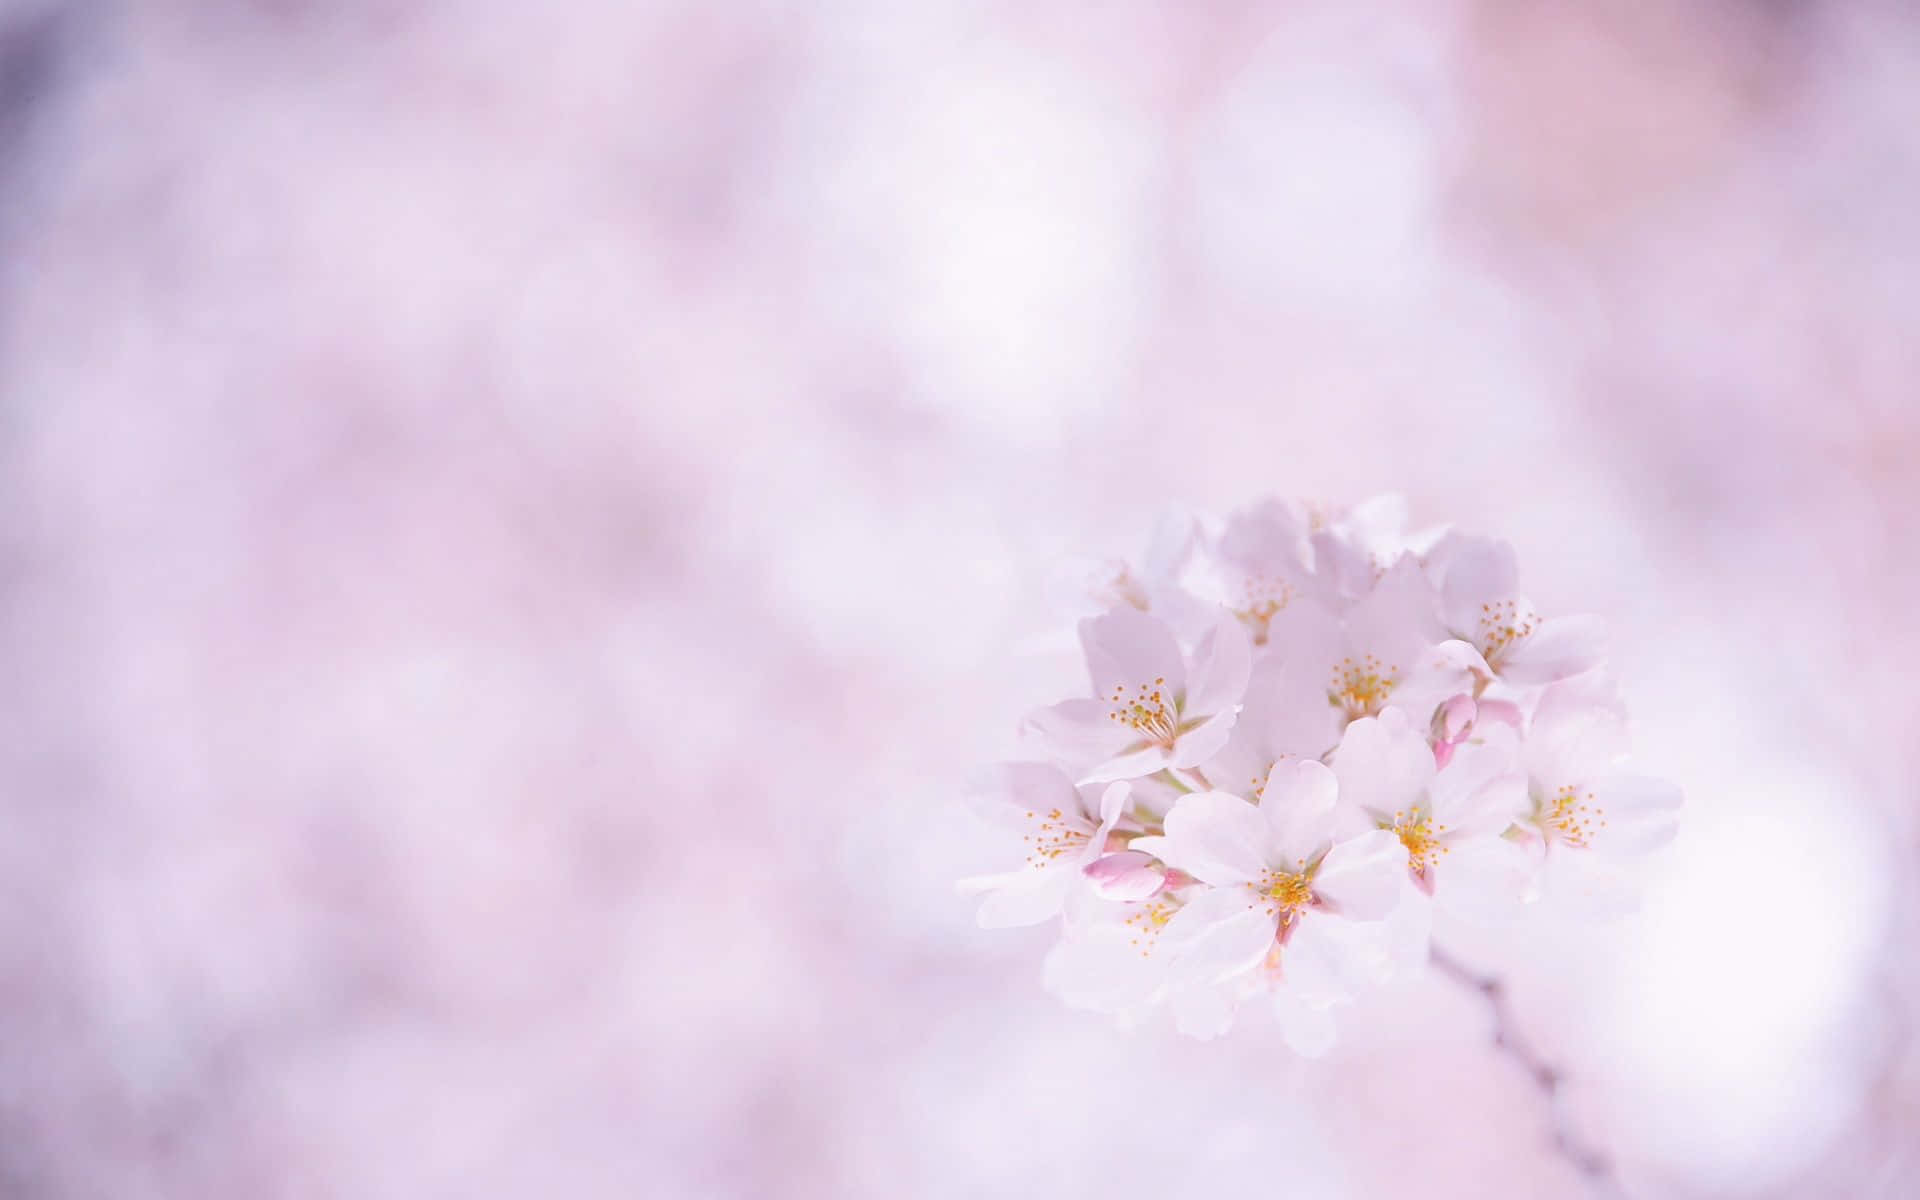 Image  Closeup of vibrant pink flower on a desktop